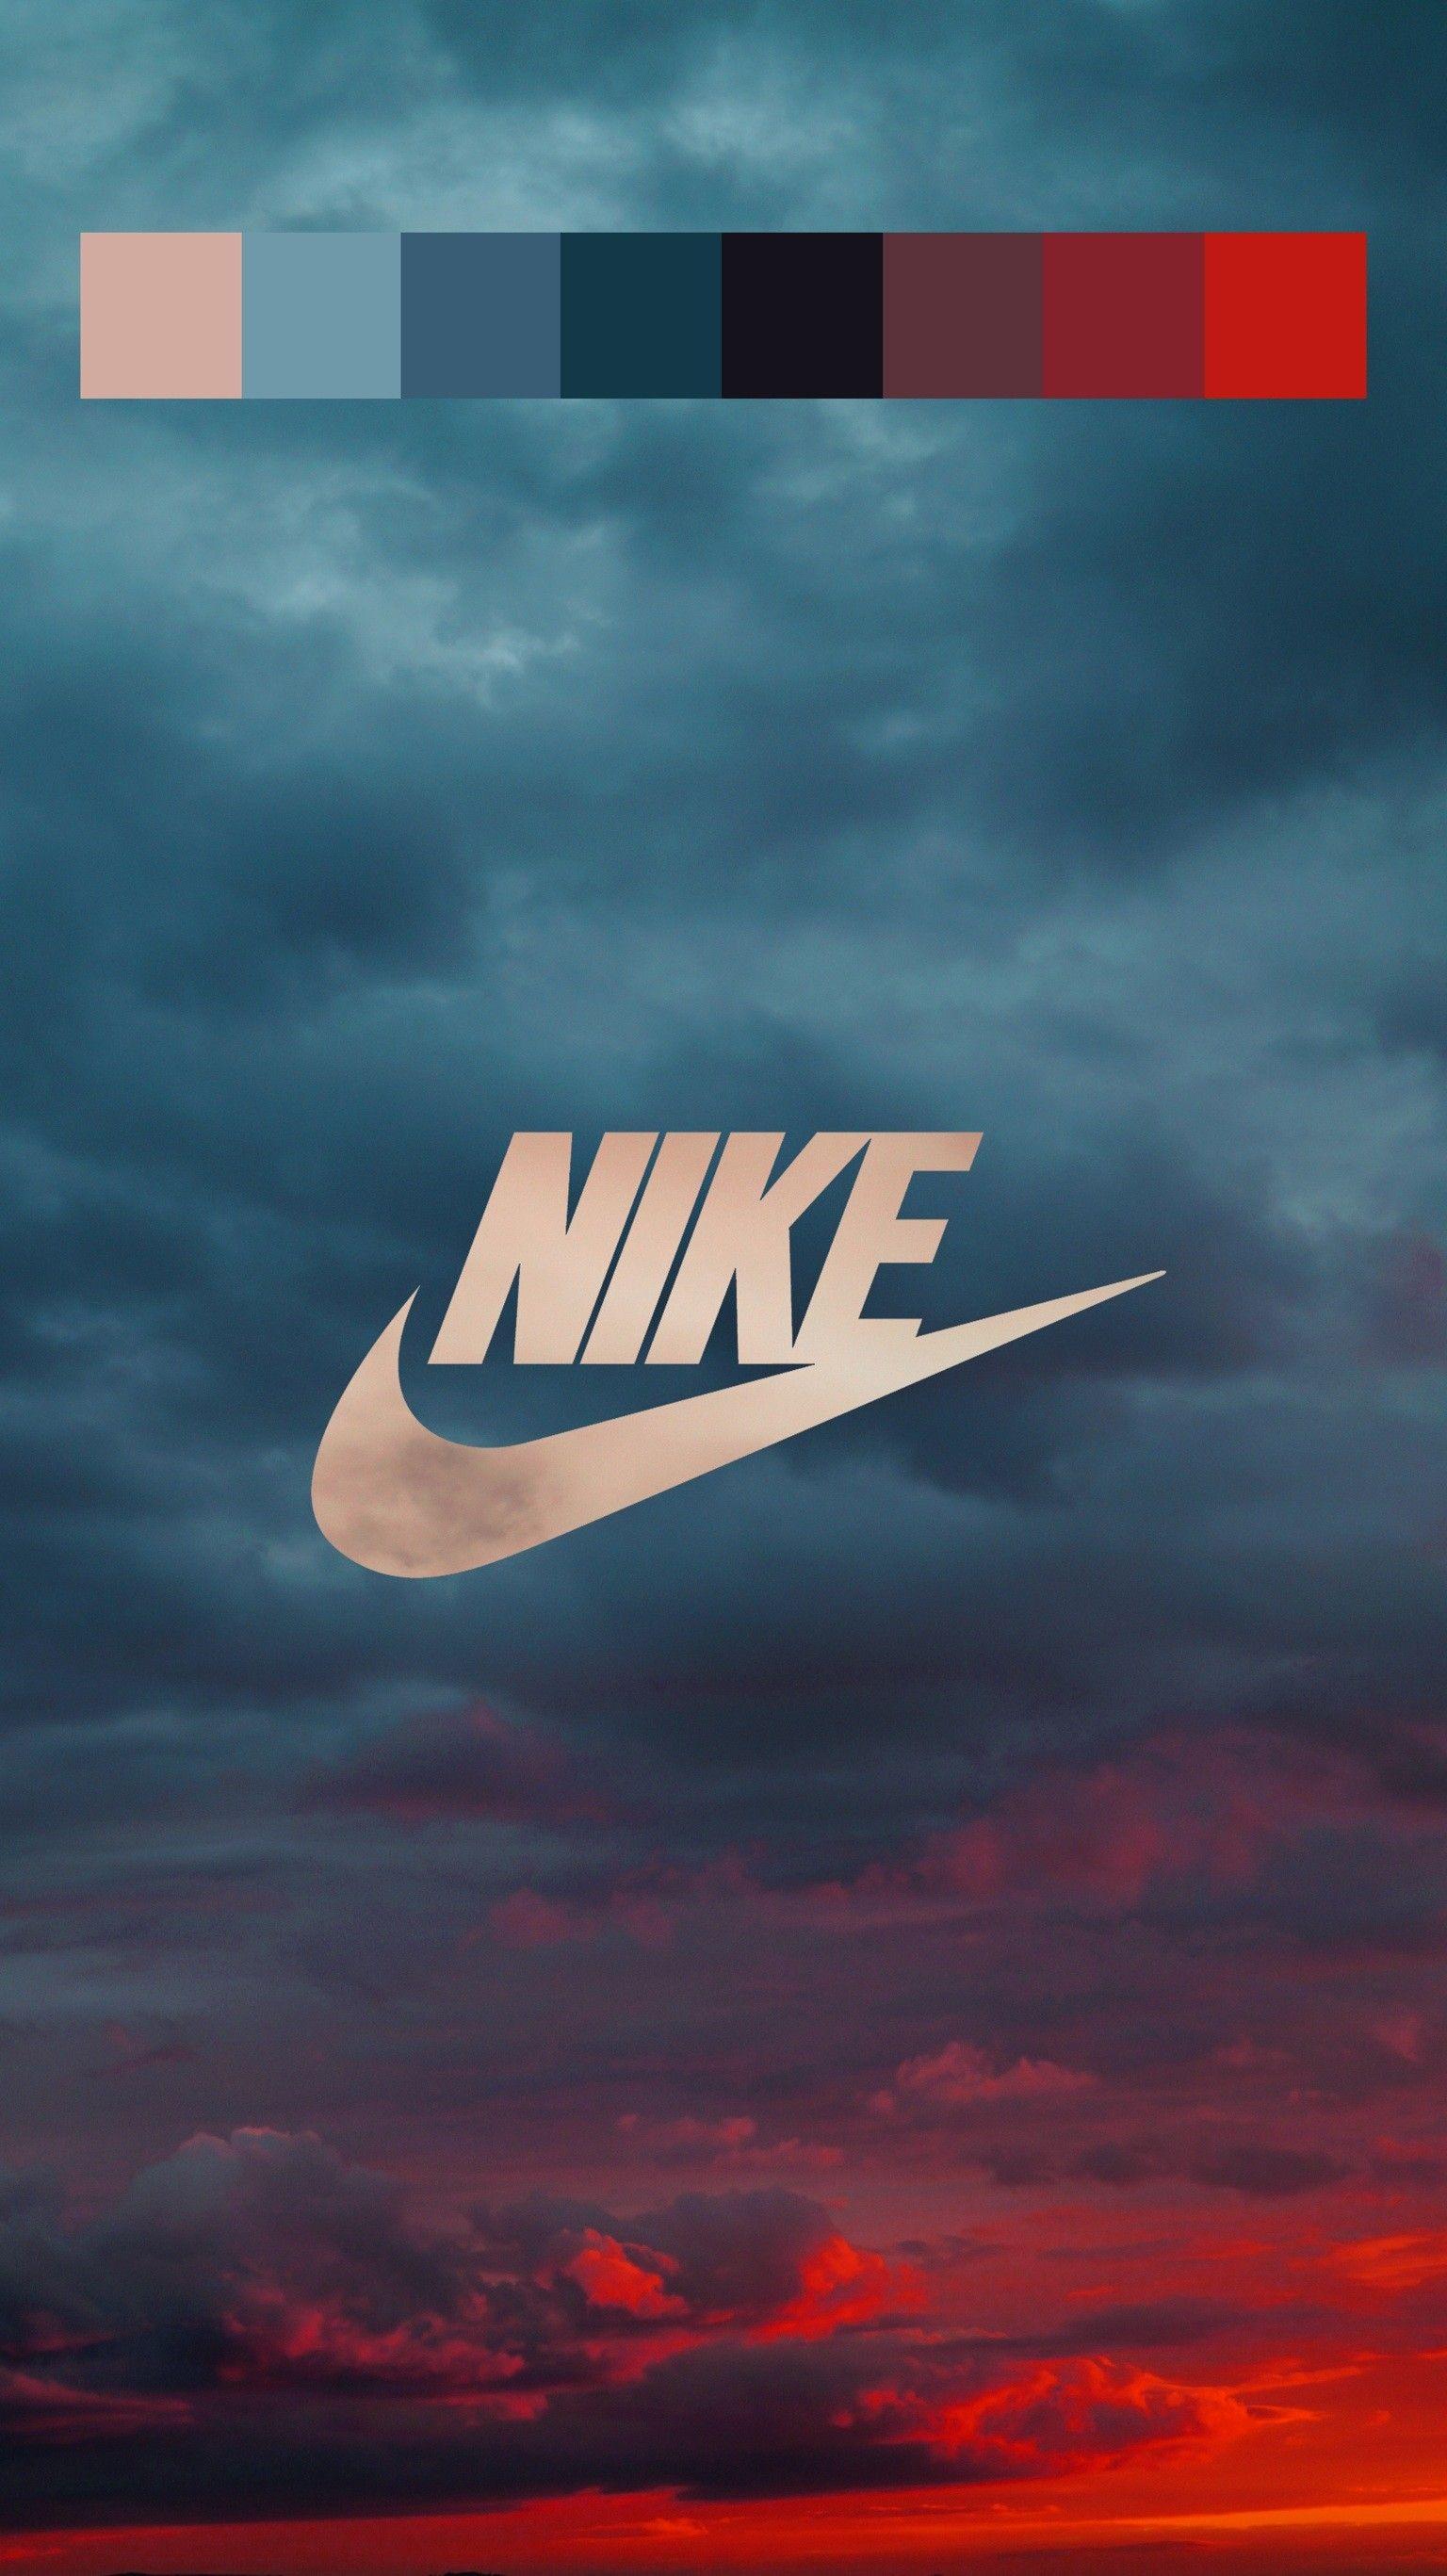 Cool Nike Wallpaper Hd 1080p